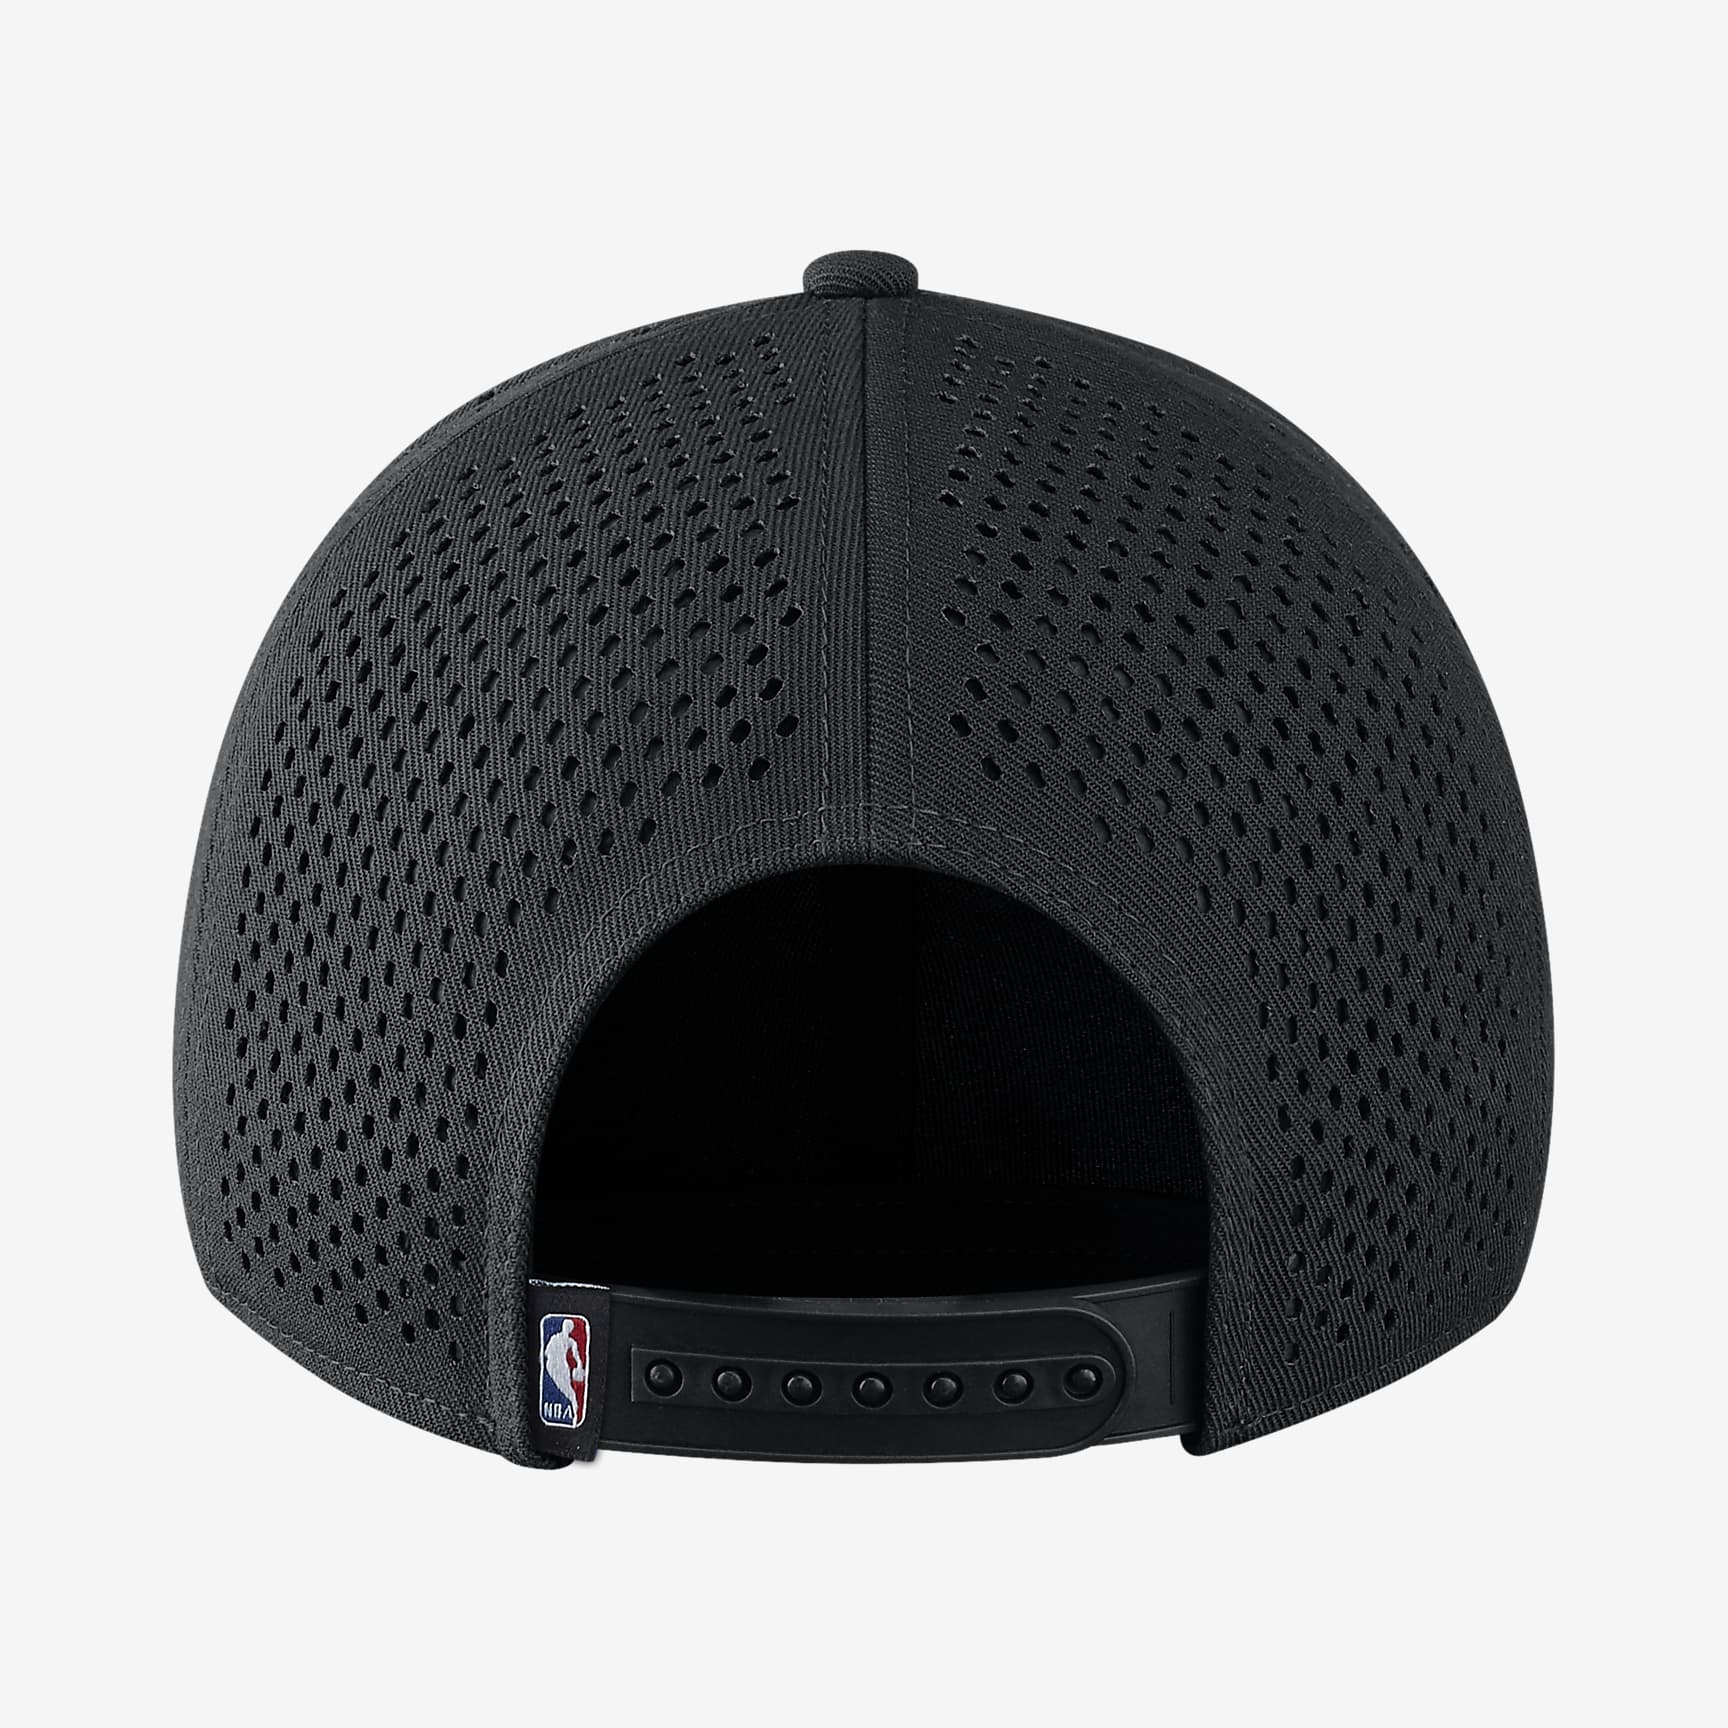 New York Knicks Nike AeroBill Classic99 中性可調式 NBA 帽款。Nike TW